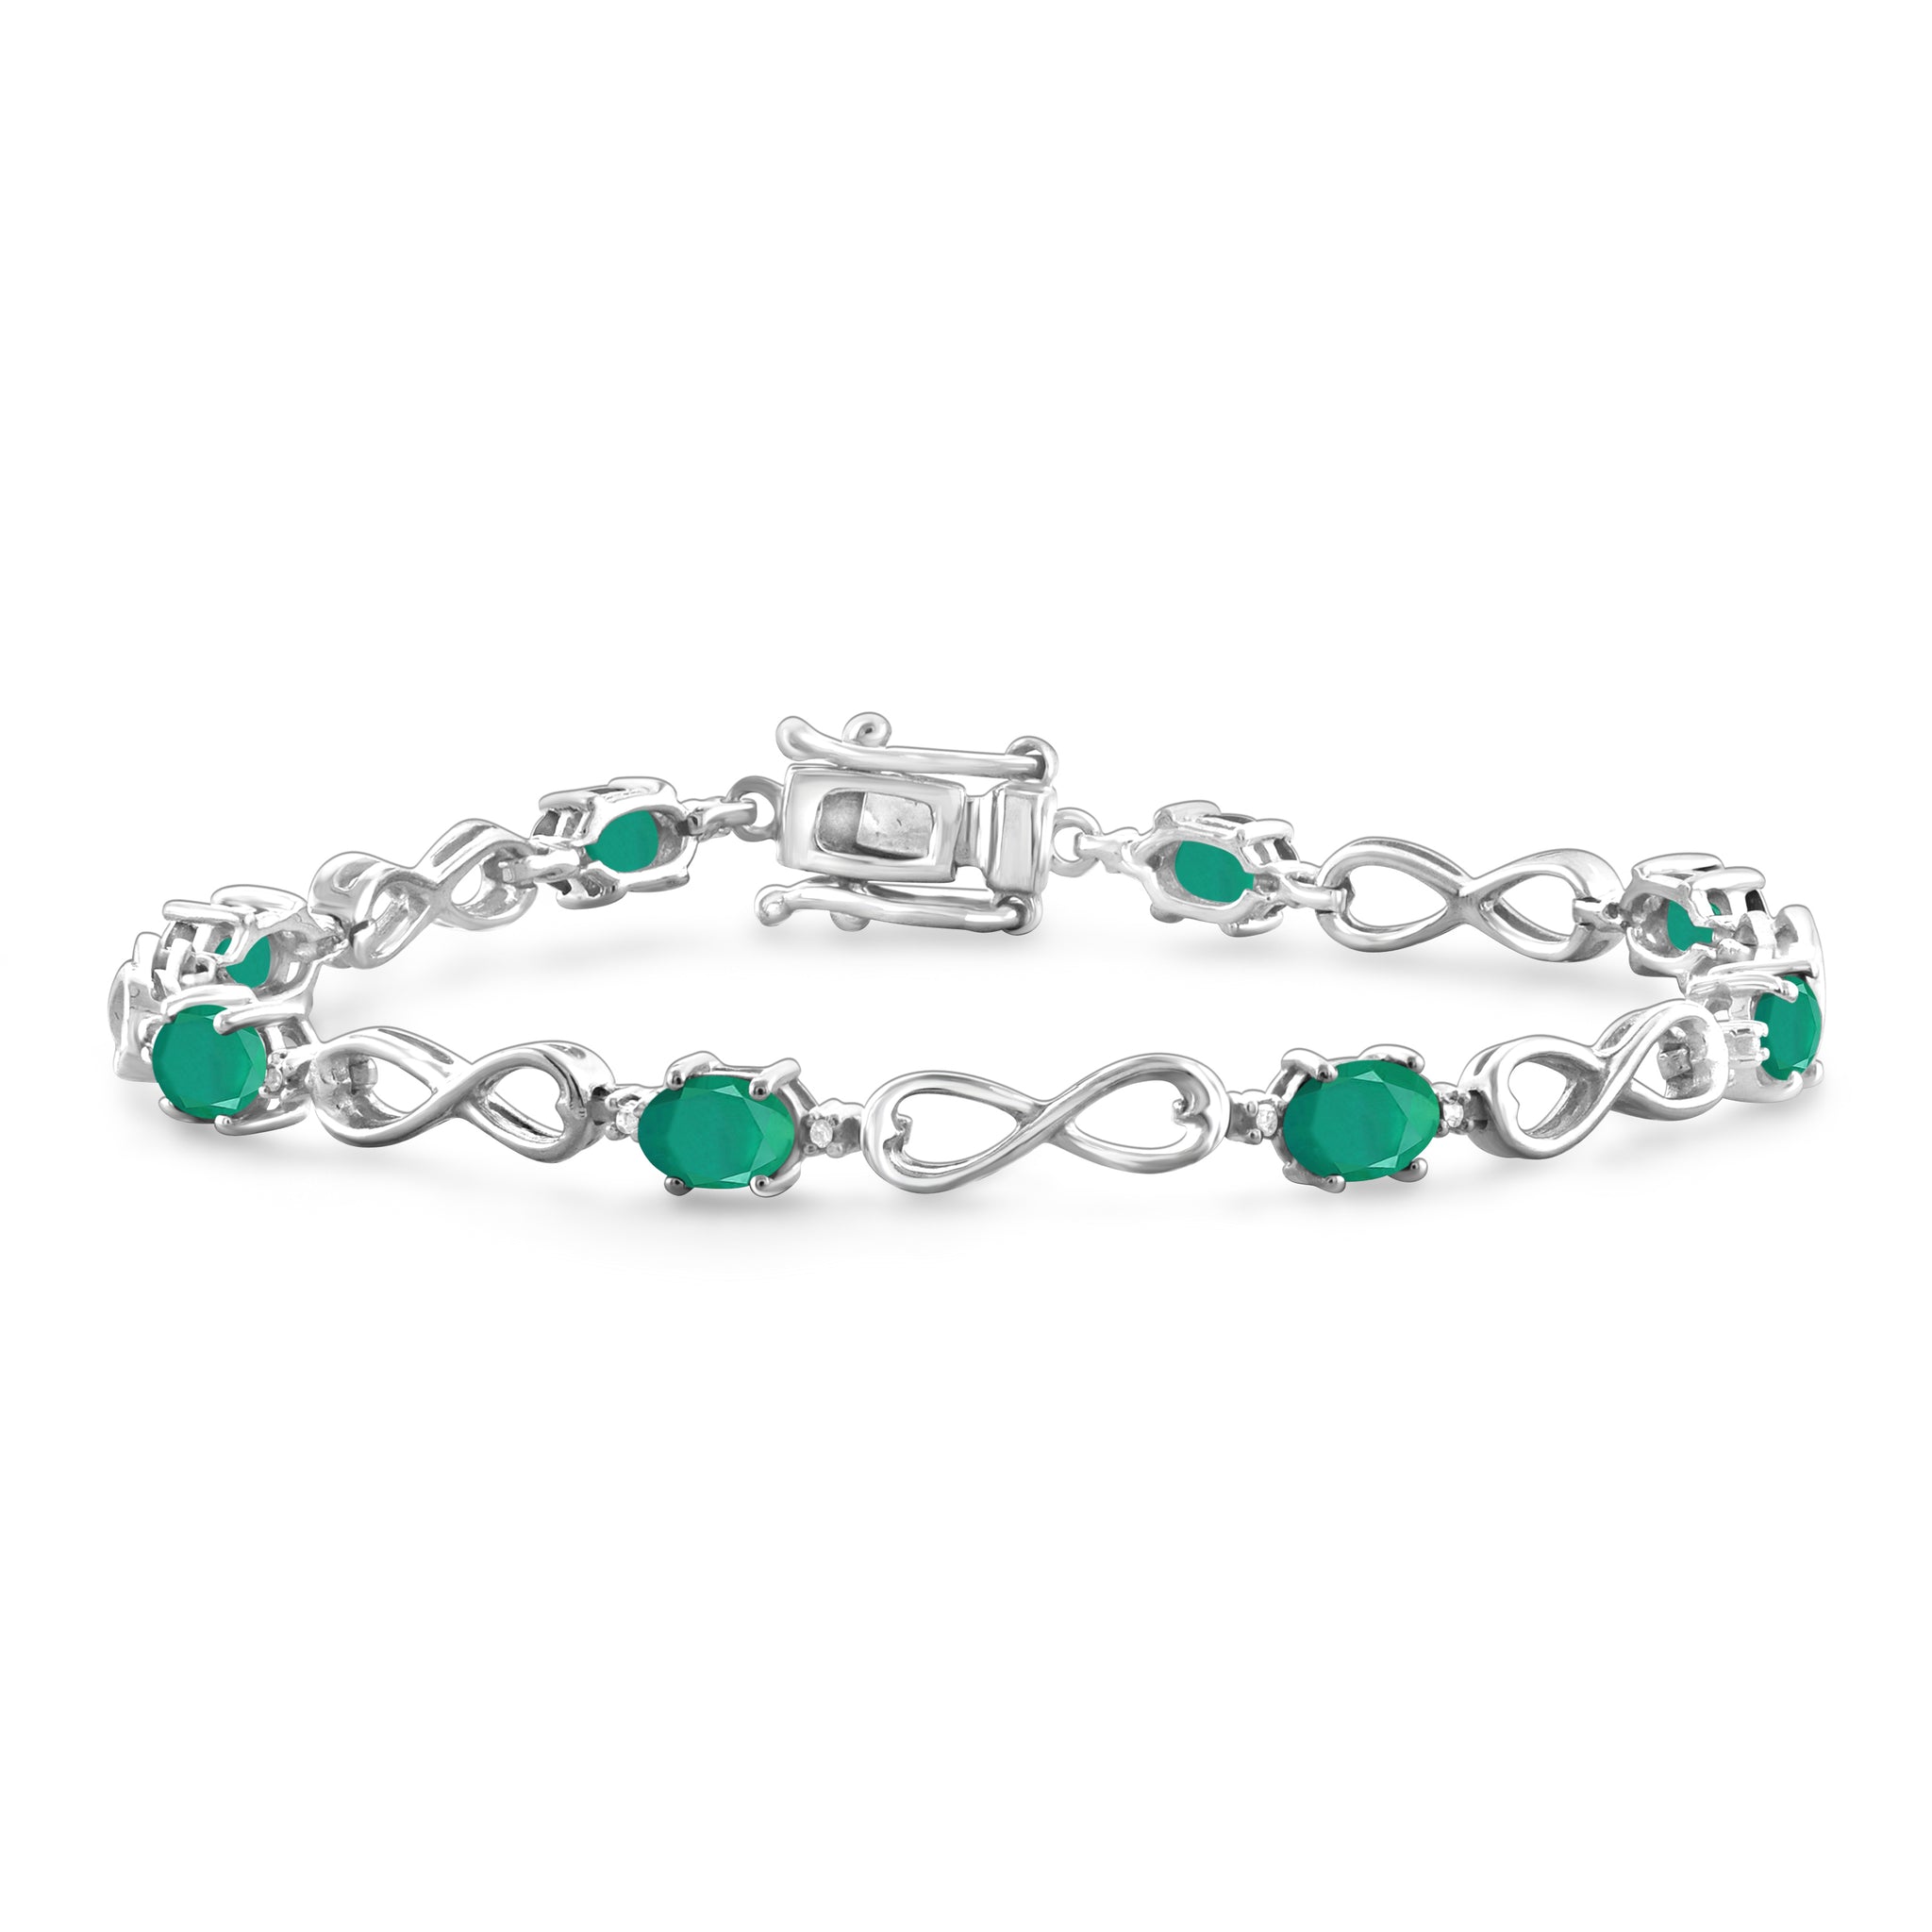 JewelonFire 3.00 Carat T.G.W. Genuine Emerald & White Diamond Accent Sterling Silver Bracelet - Assorted Colors